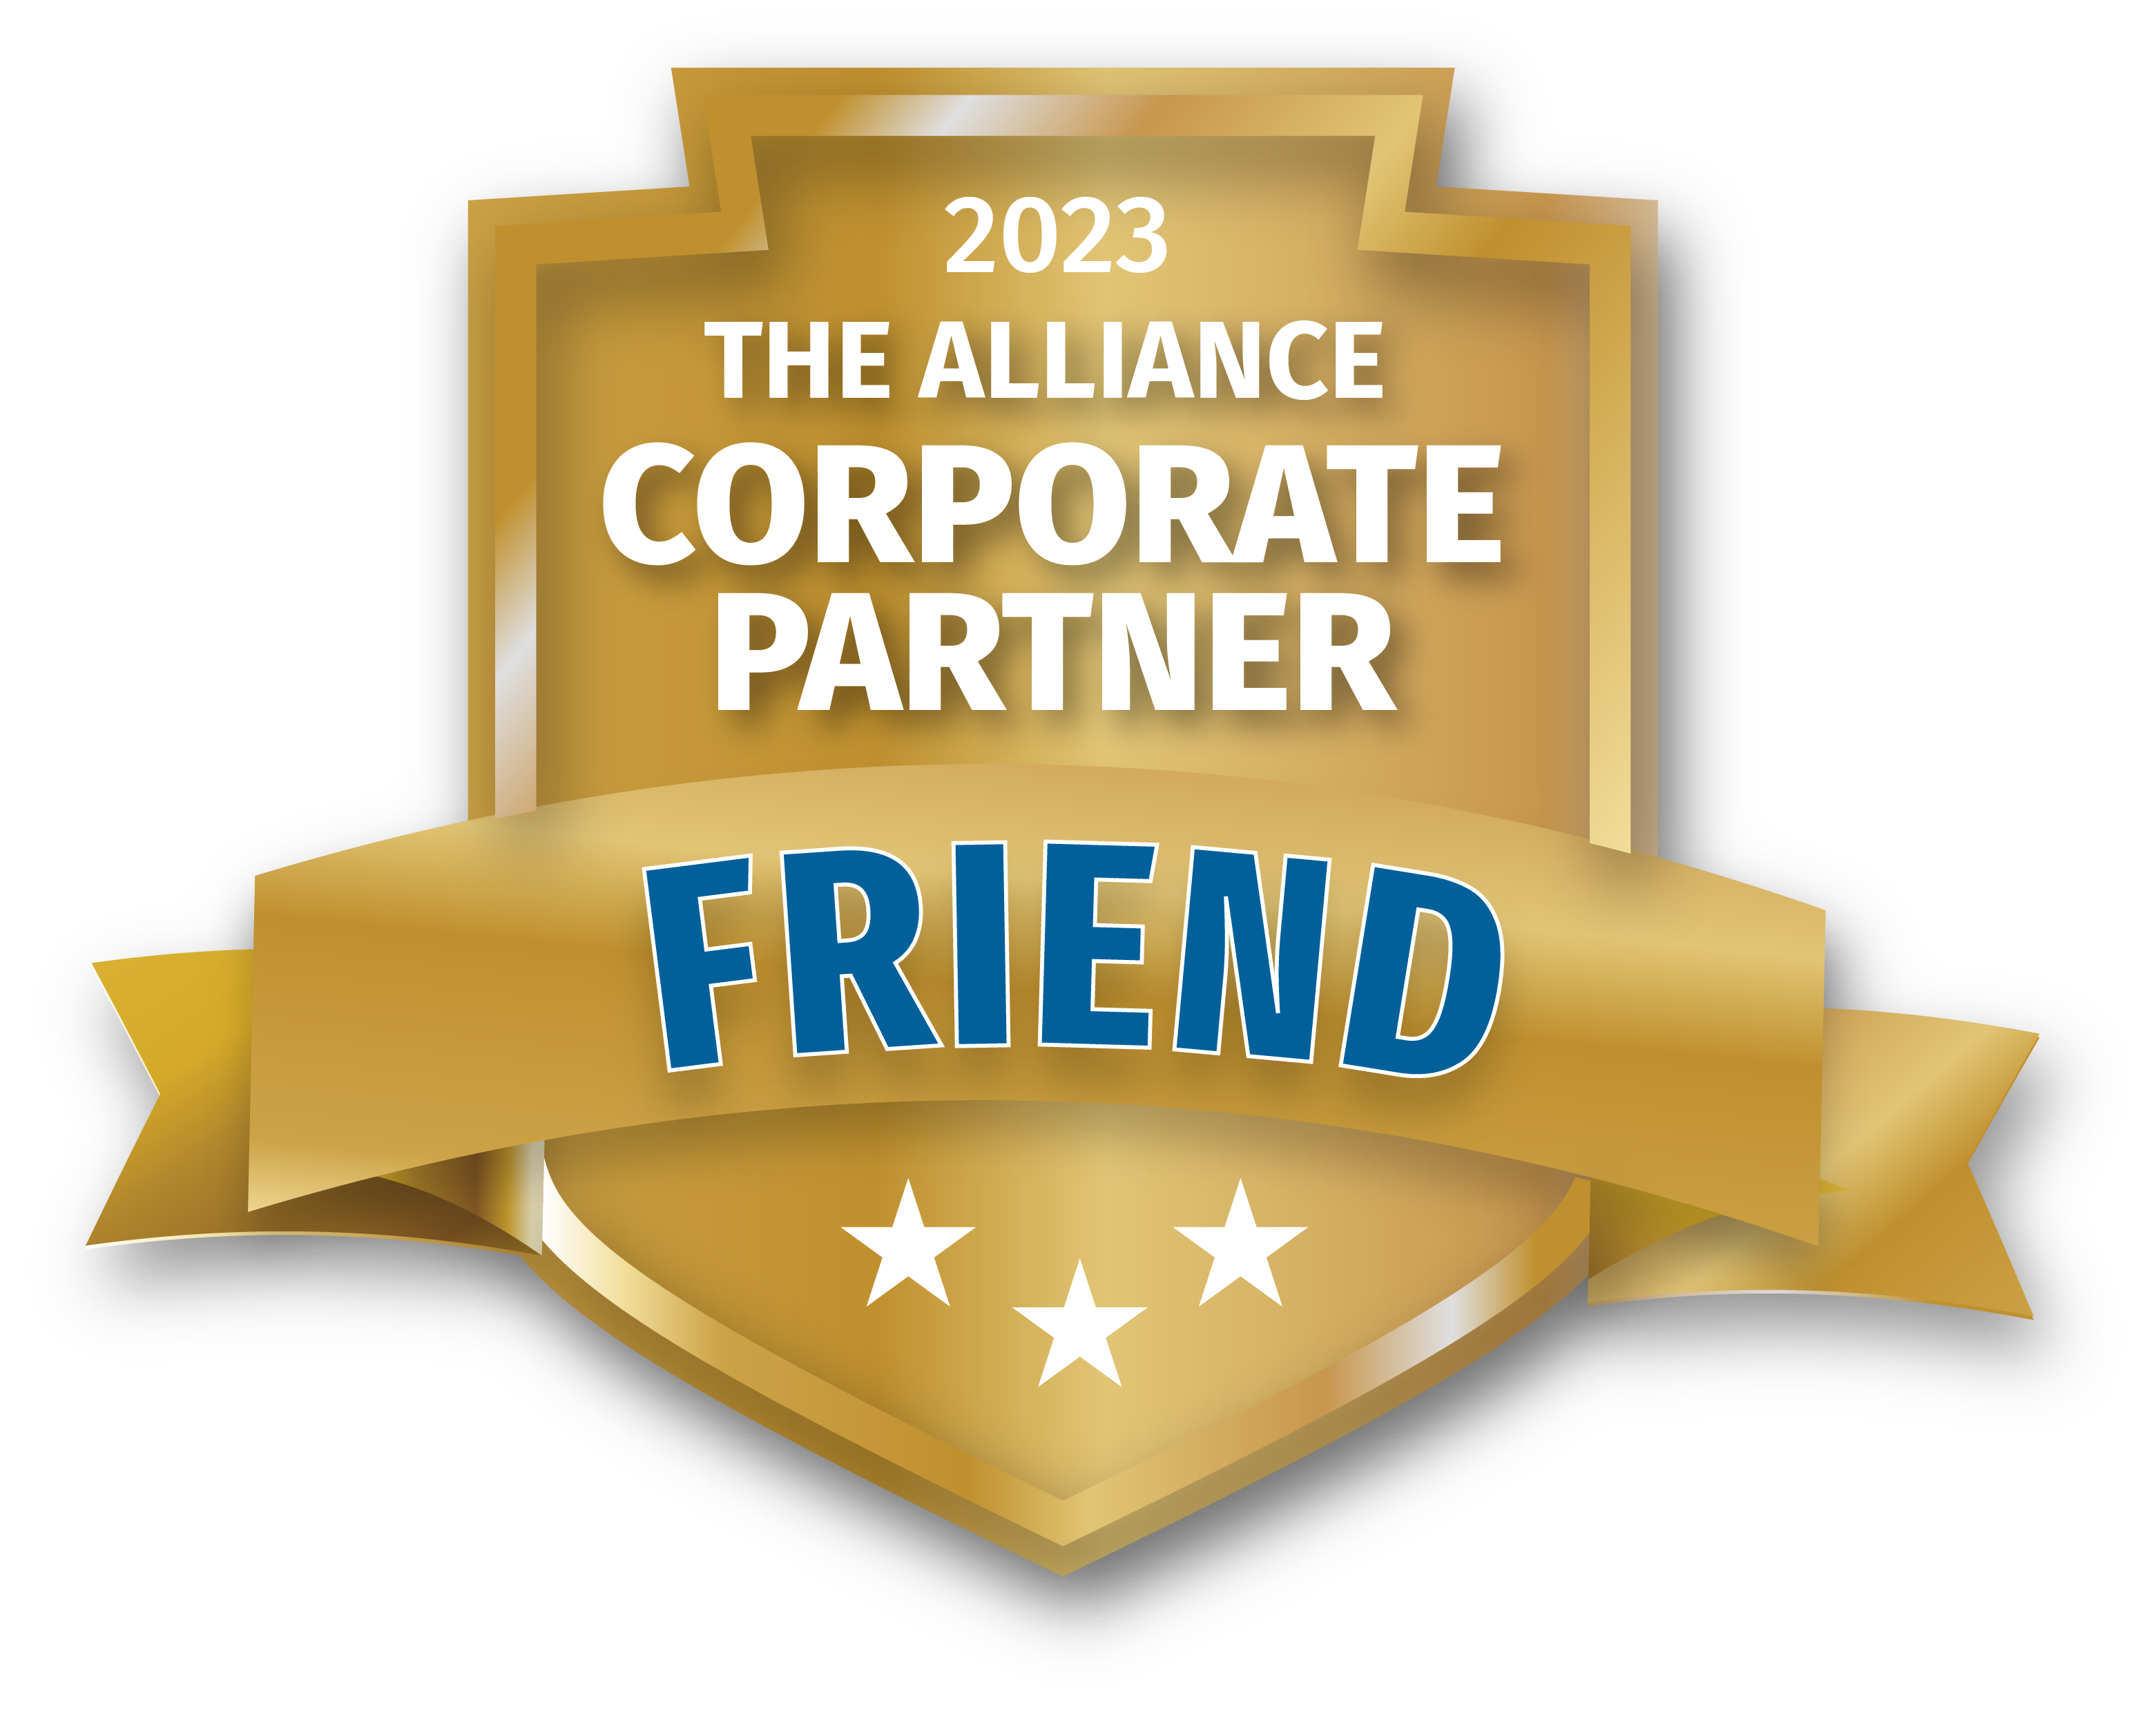 AllianceCorporatePartner 2023 Friend